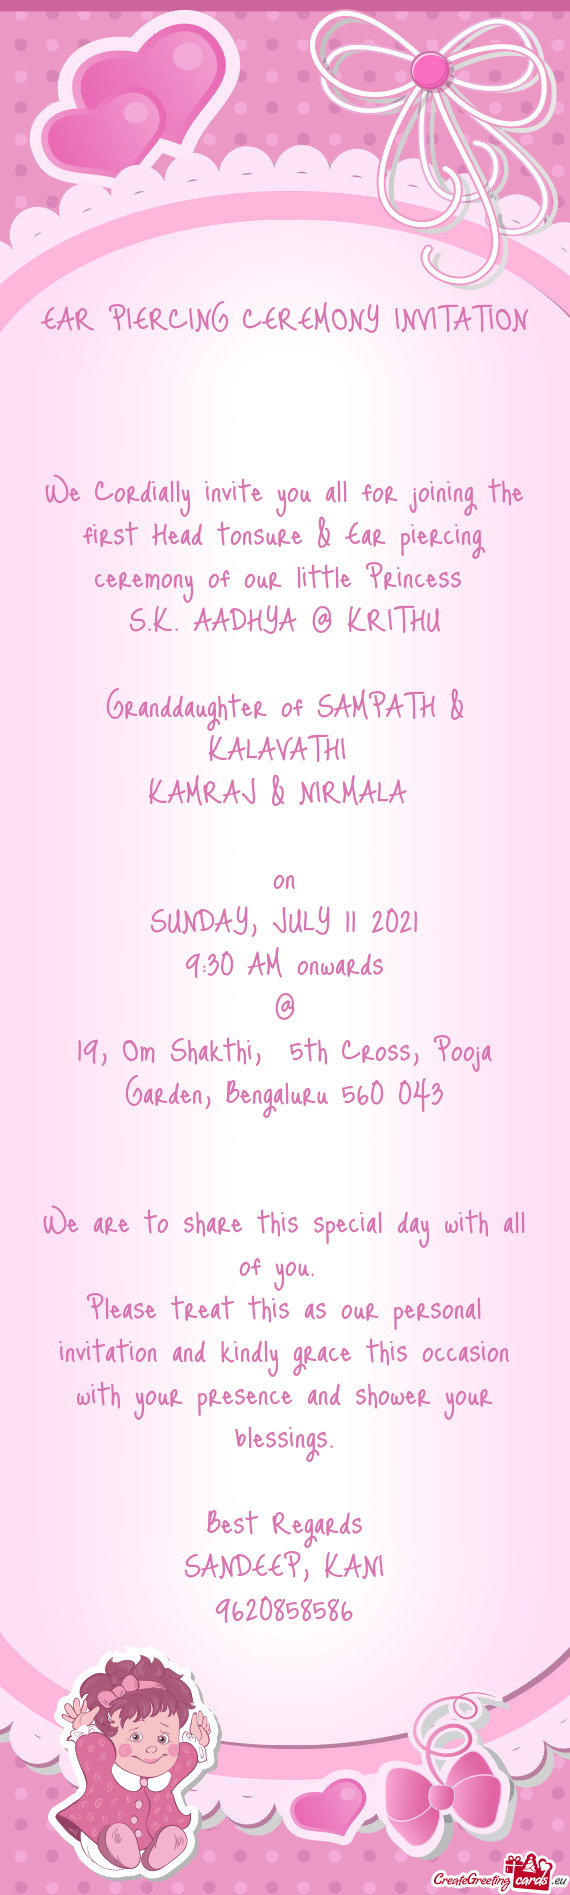 AADHYA @ KRITHU
 
 Granddaughter of SAMPATH & KALAVATHI 
 KAMRAJ & NIRMALA 
 
 on
 SUNDAY